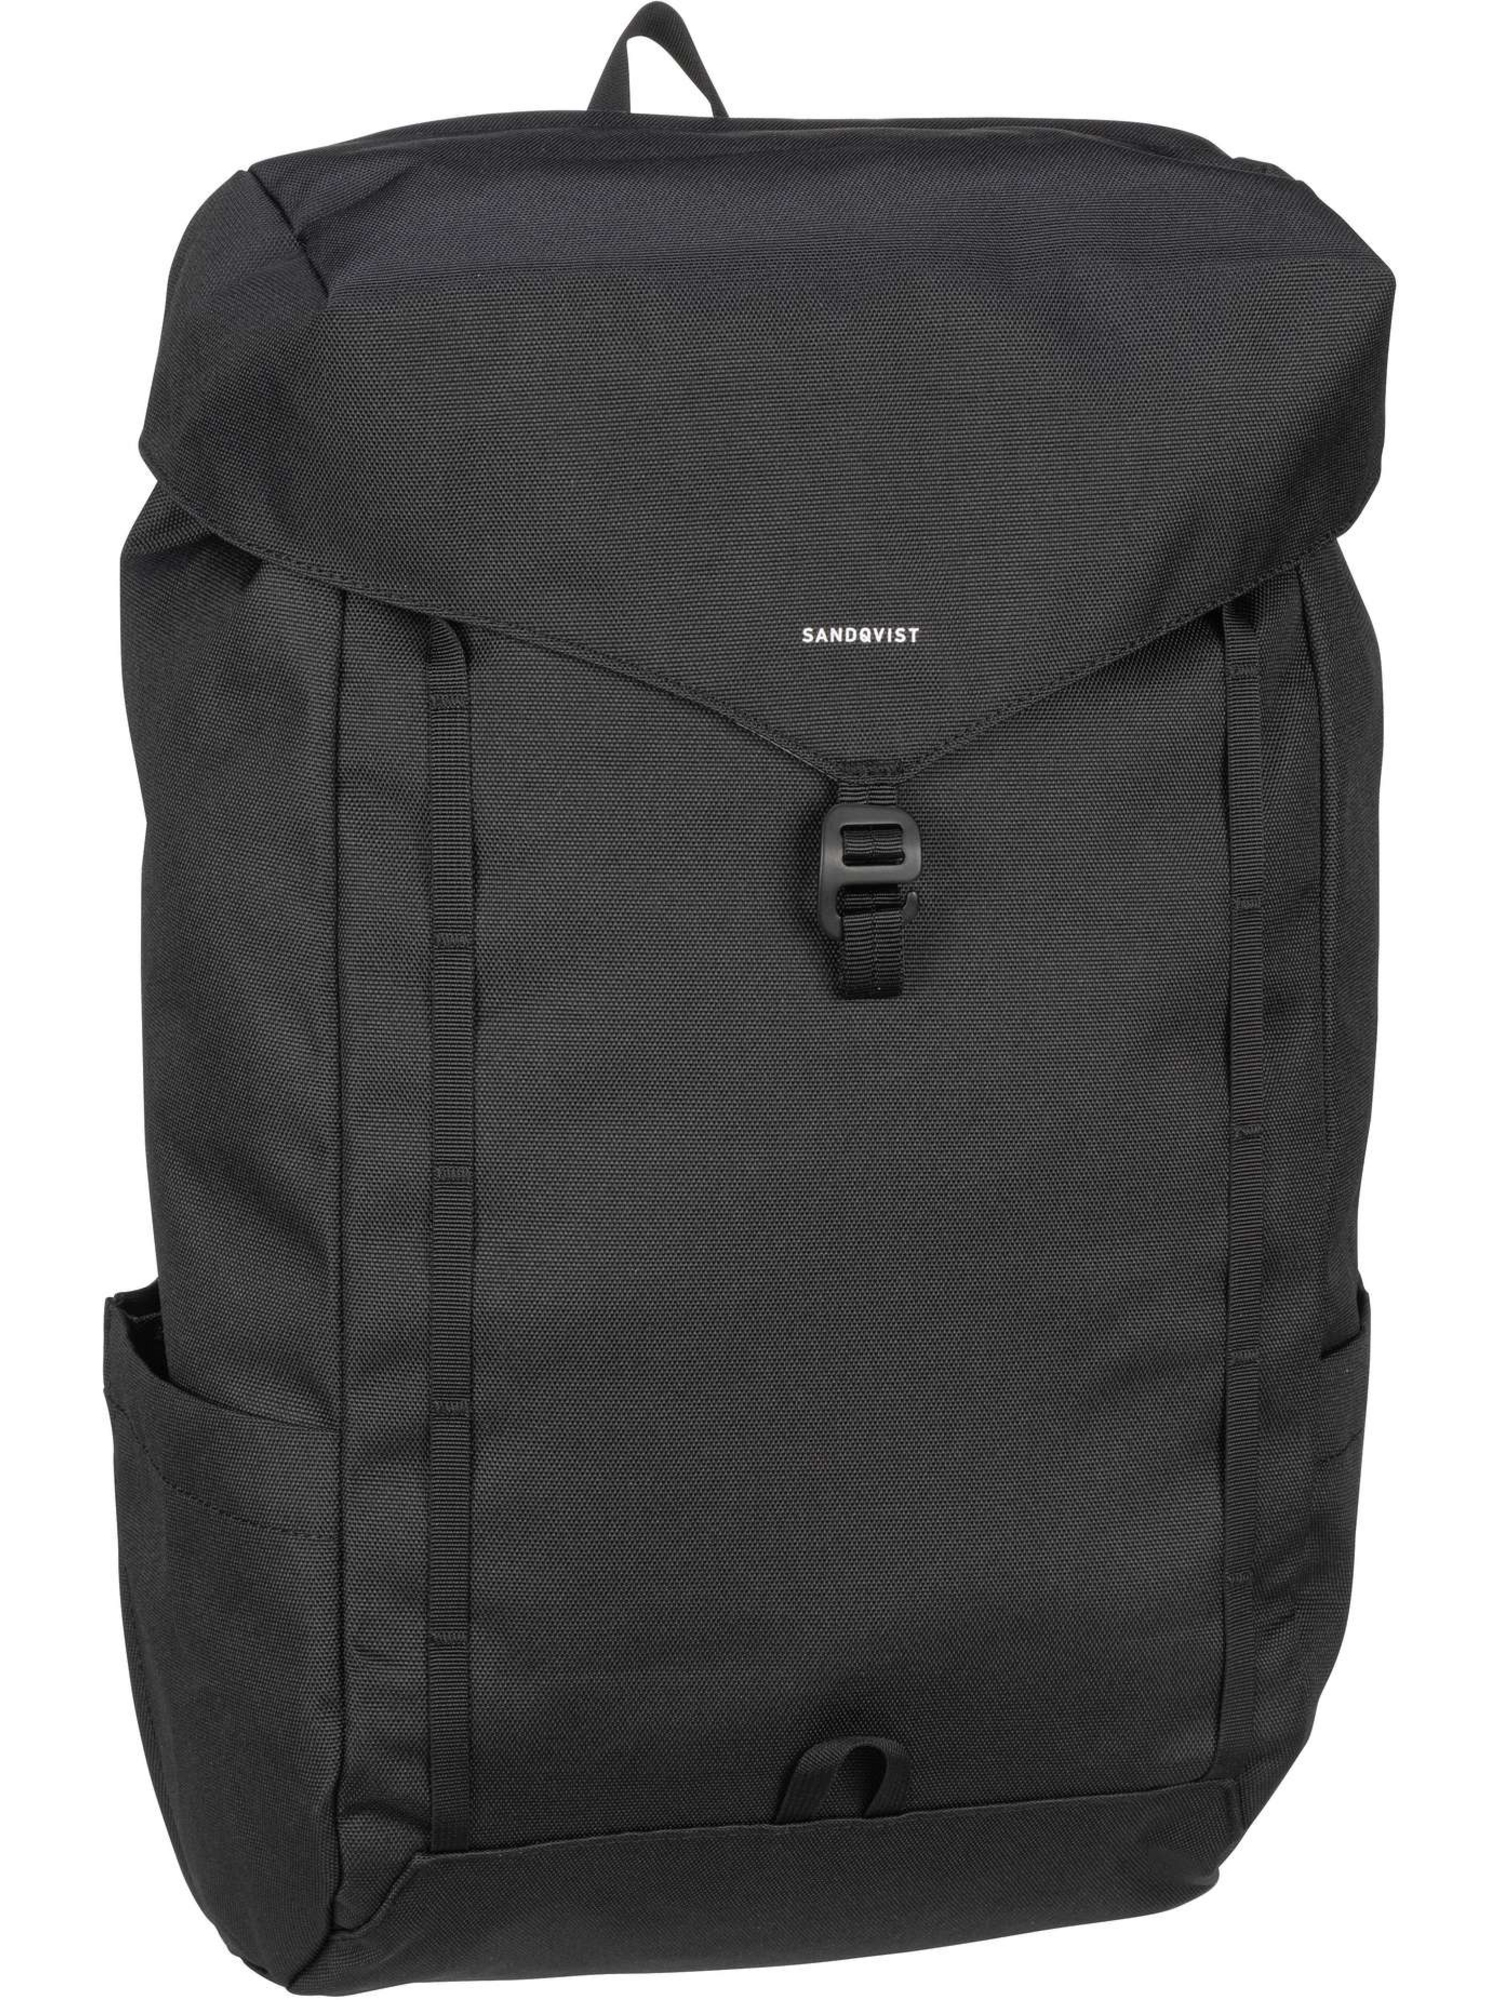 Рюкзак SANDQVIST/Backpack Walter Backpack, черный рюкзак sandqvist backpack jonatan цвет ash grey